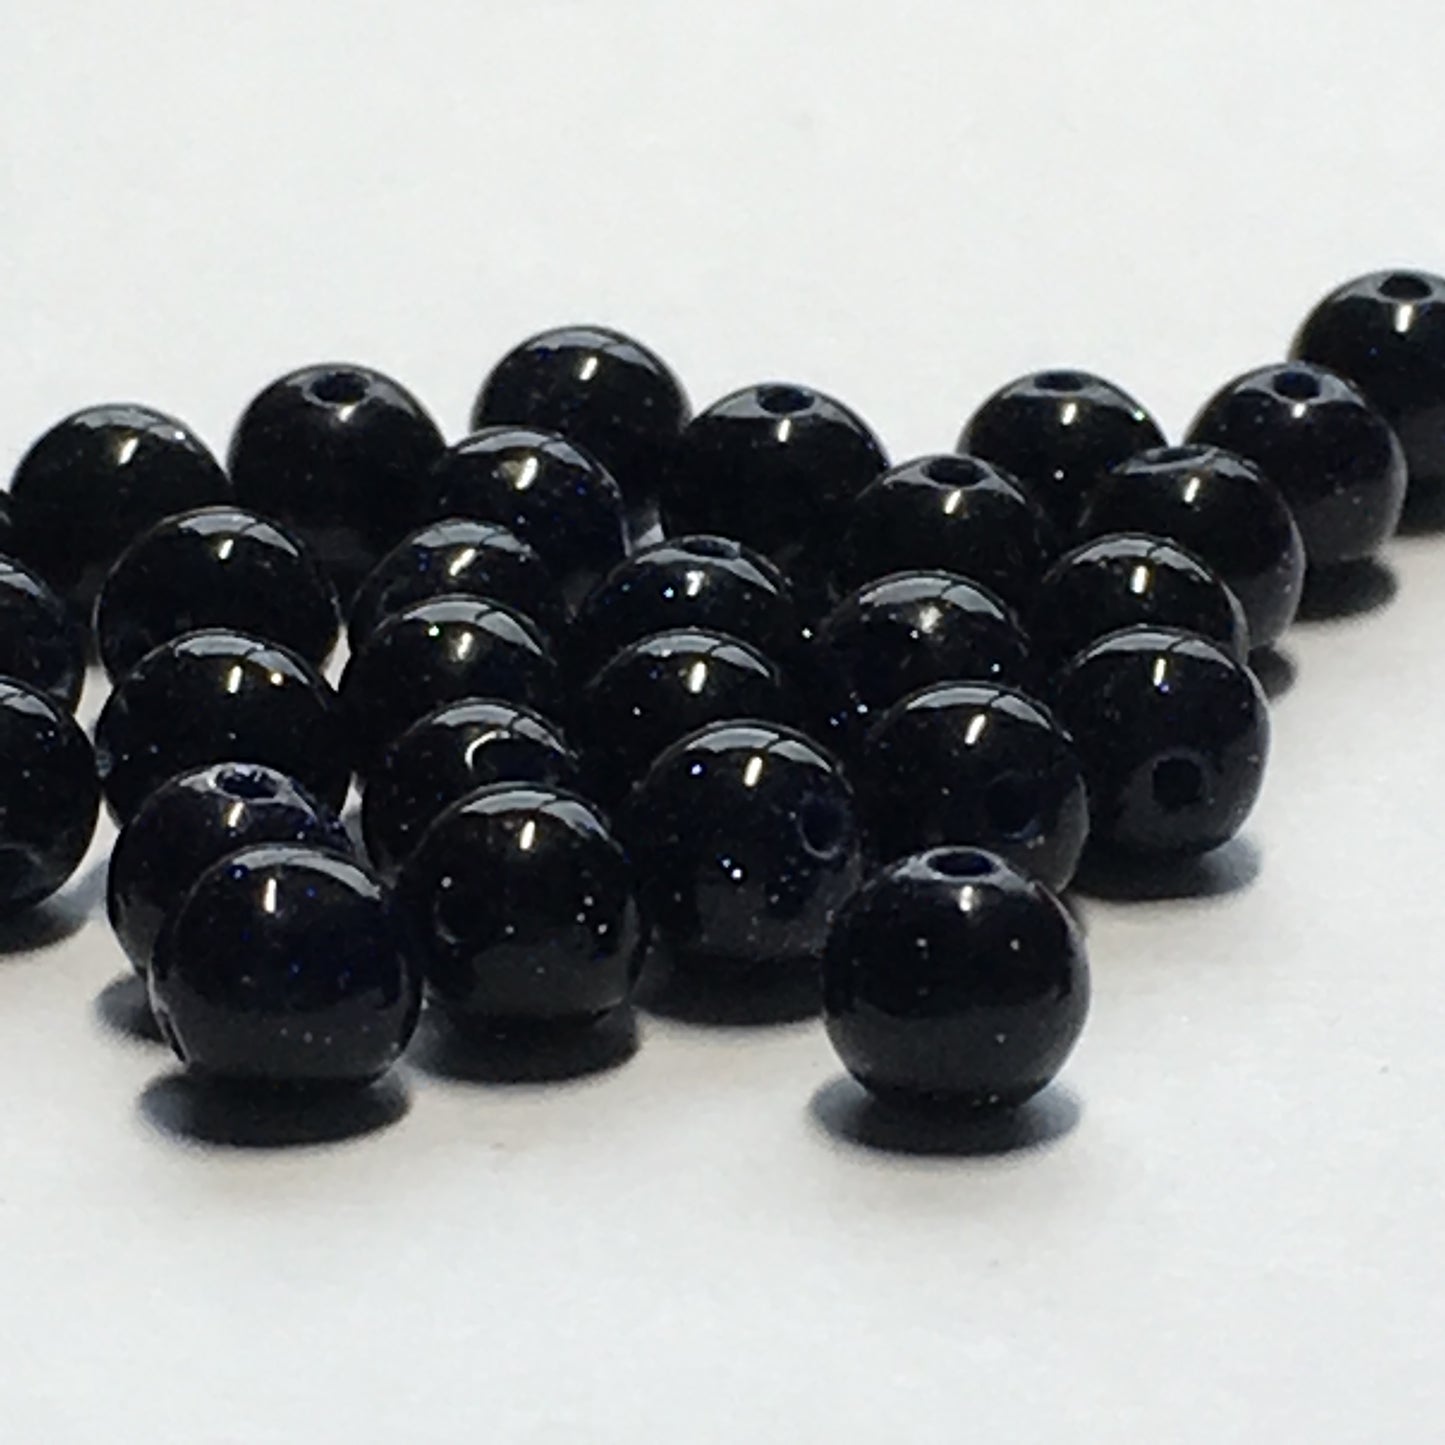 Blue Goldstone Semi-Precious Stone Round Beads, 4 mm - 40 Beads